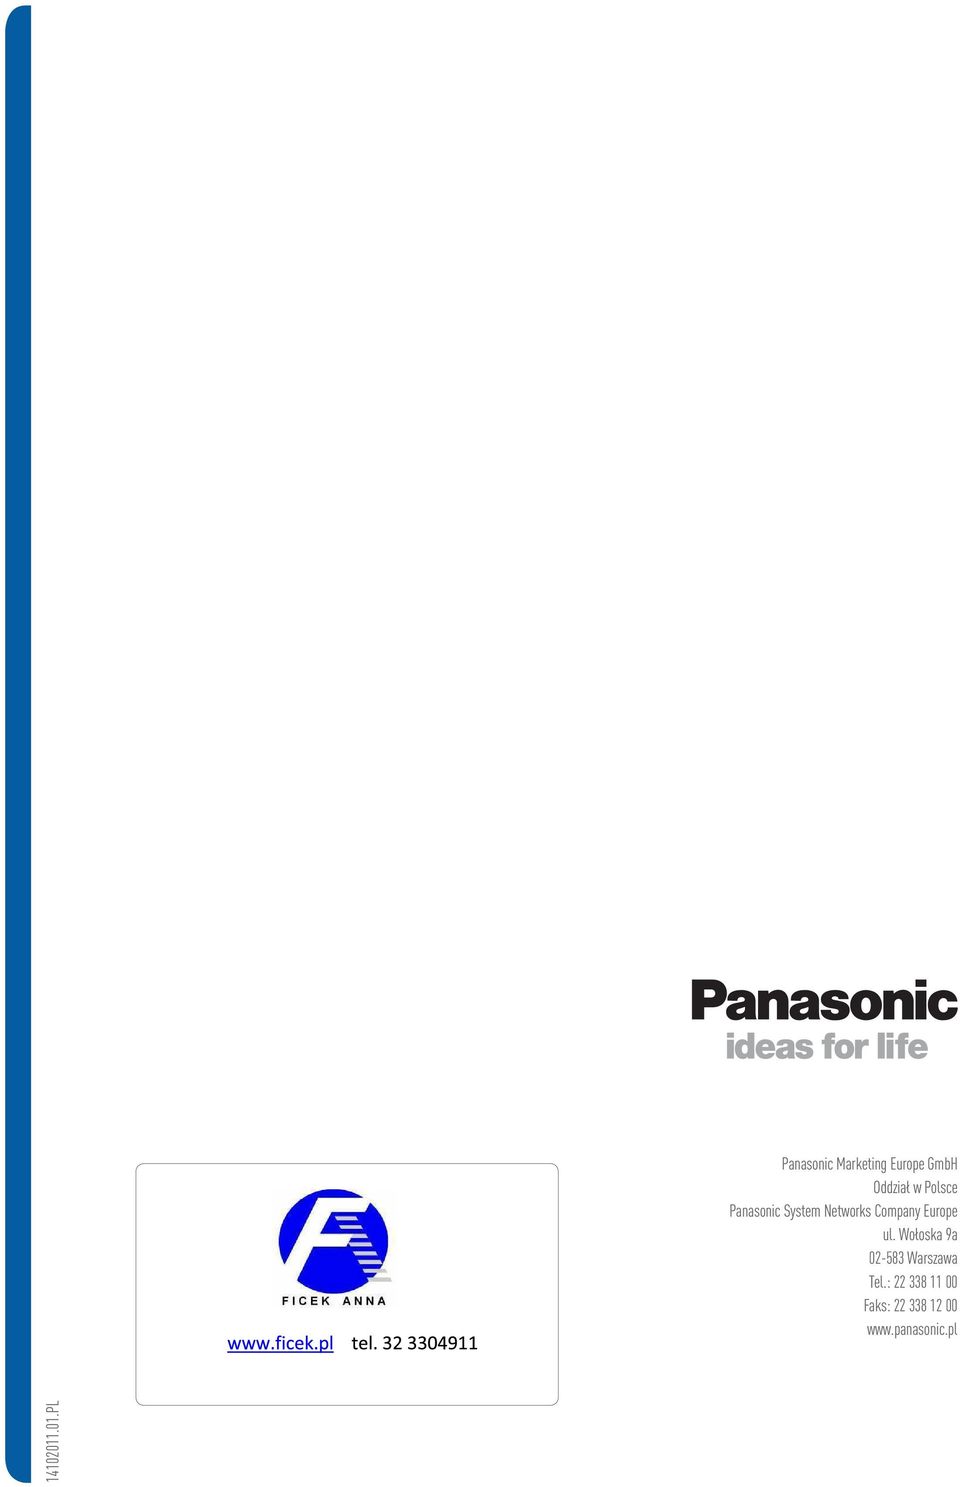 w Polsce Panasonic System Networks Company